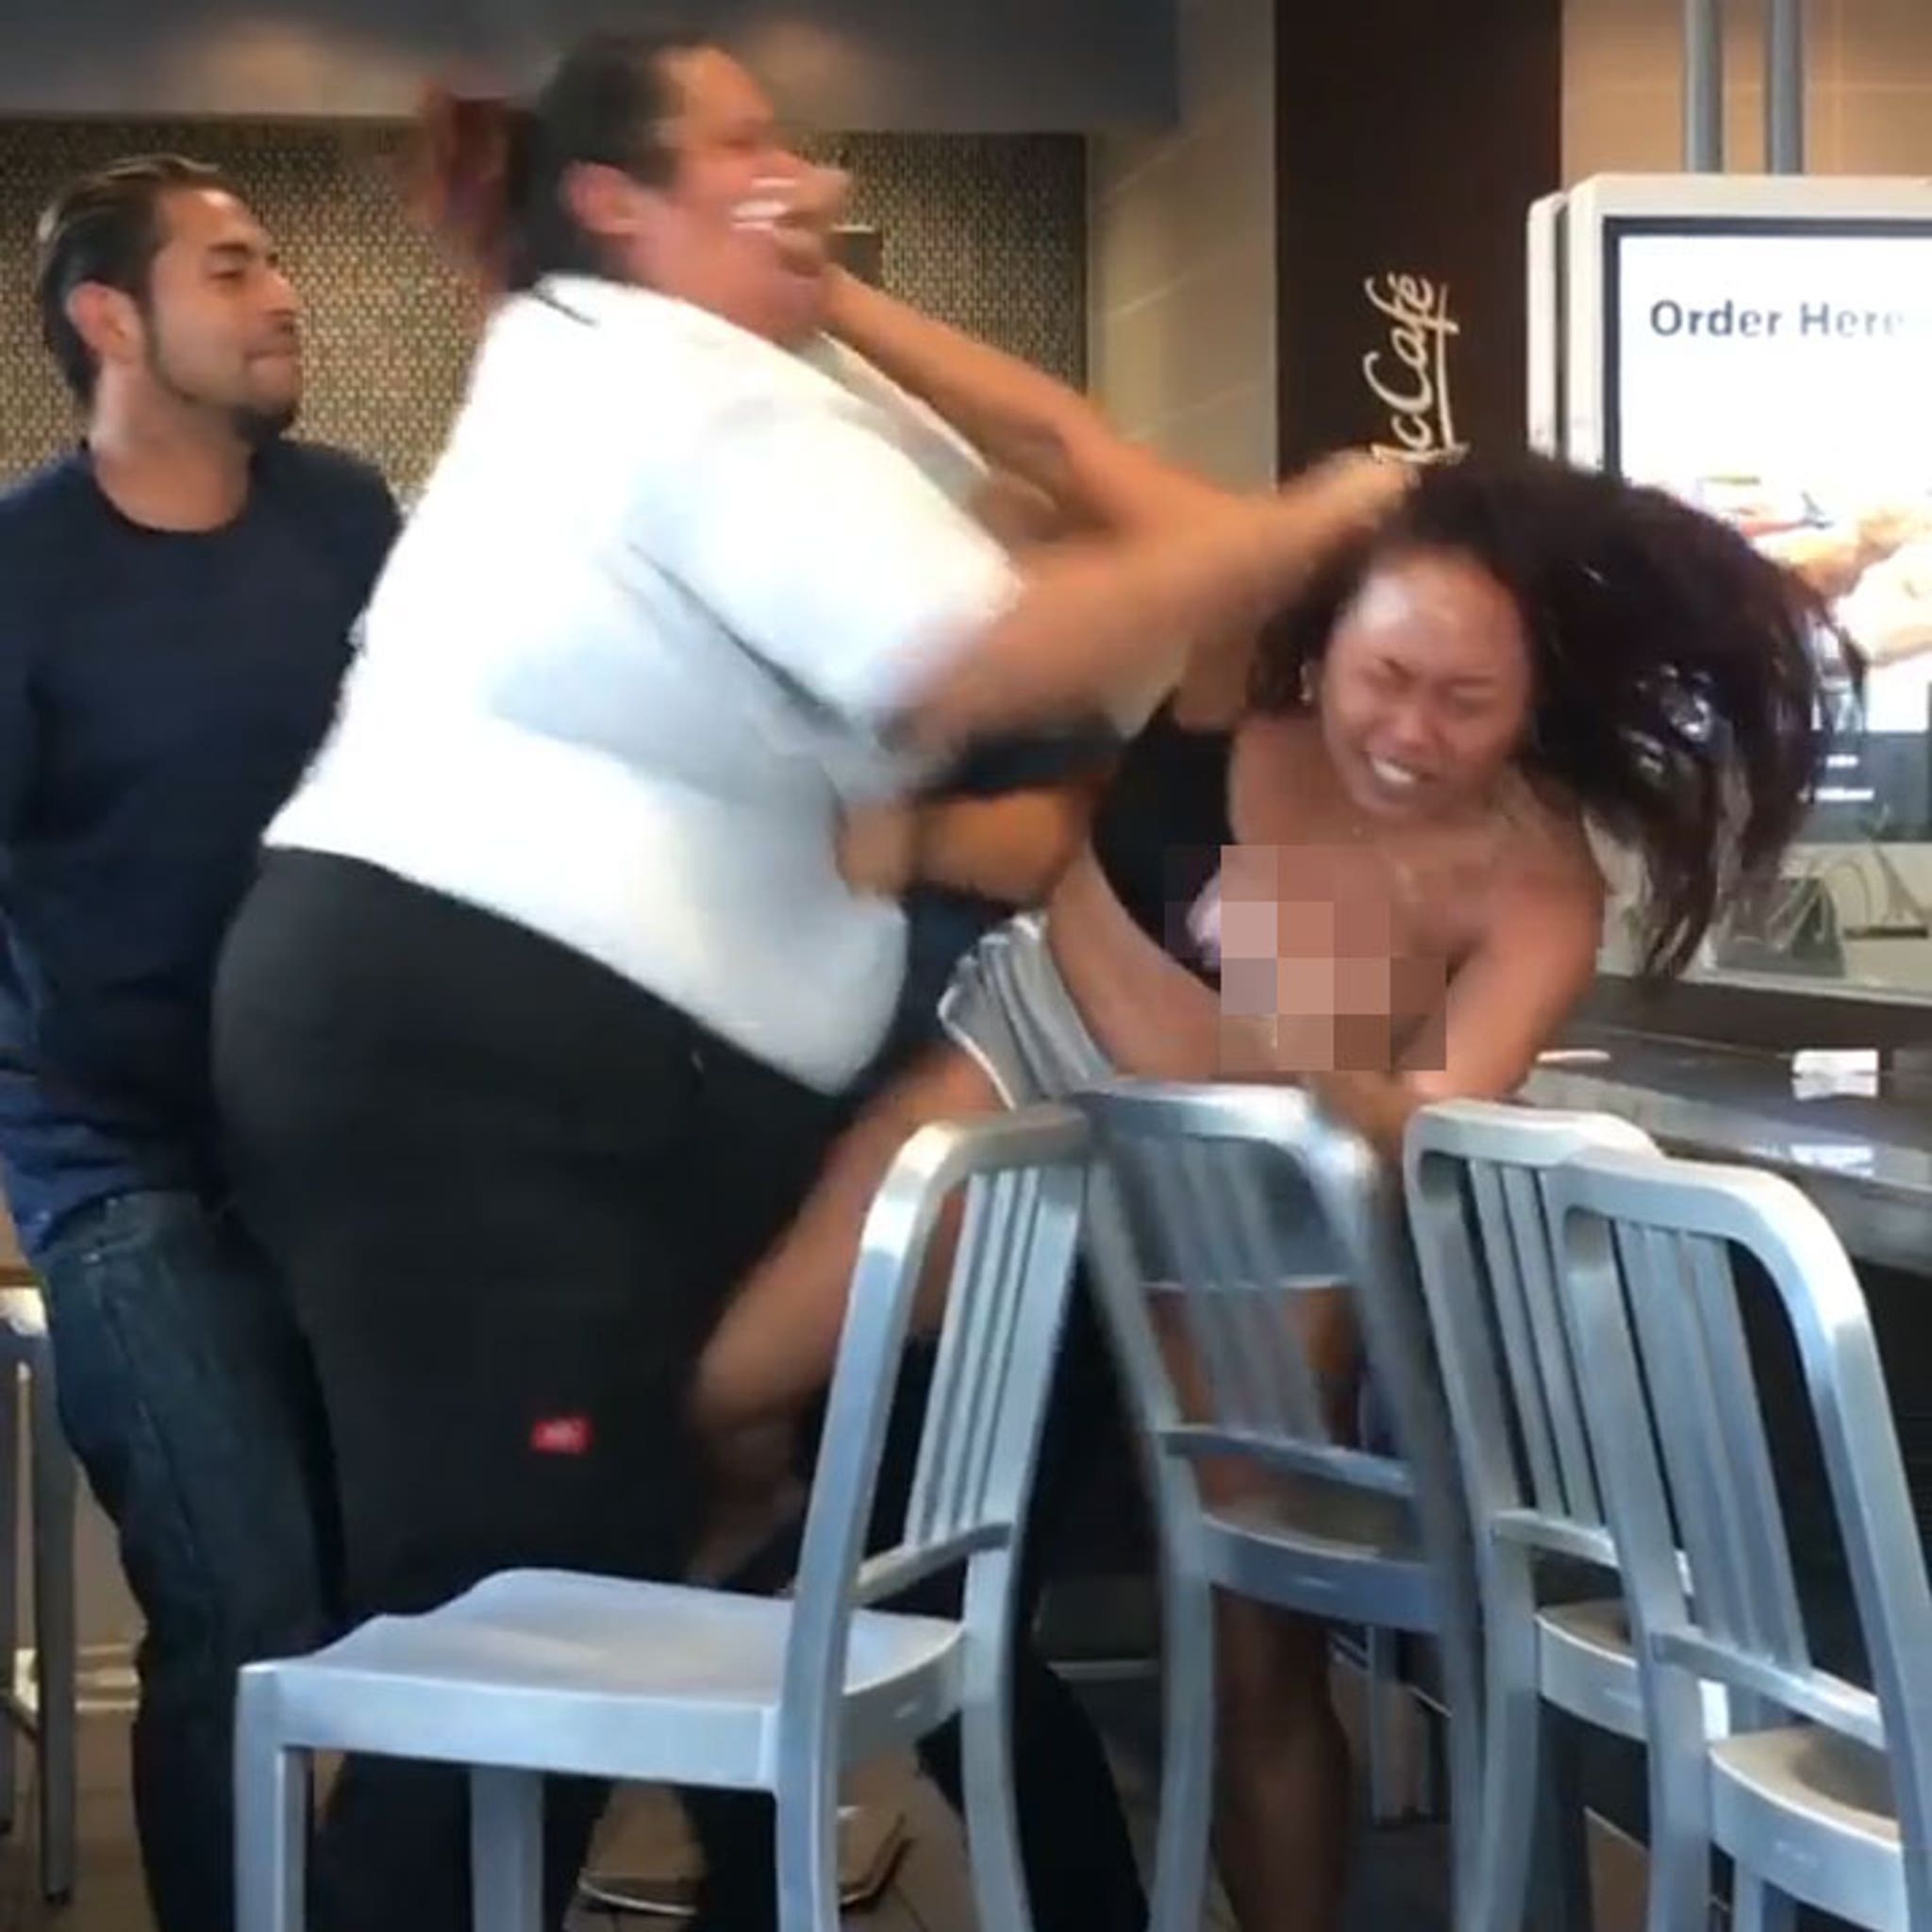 McDonald's Staffer Pummels Customer in Crazy Fight